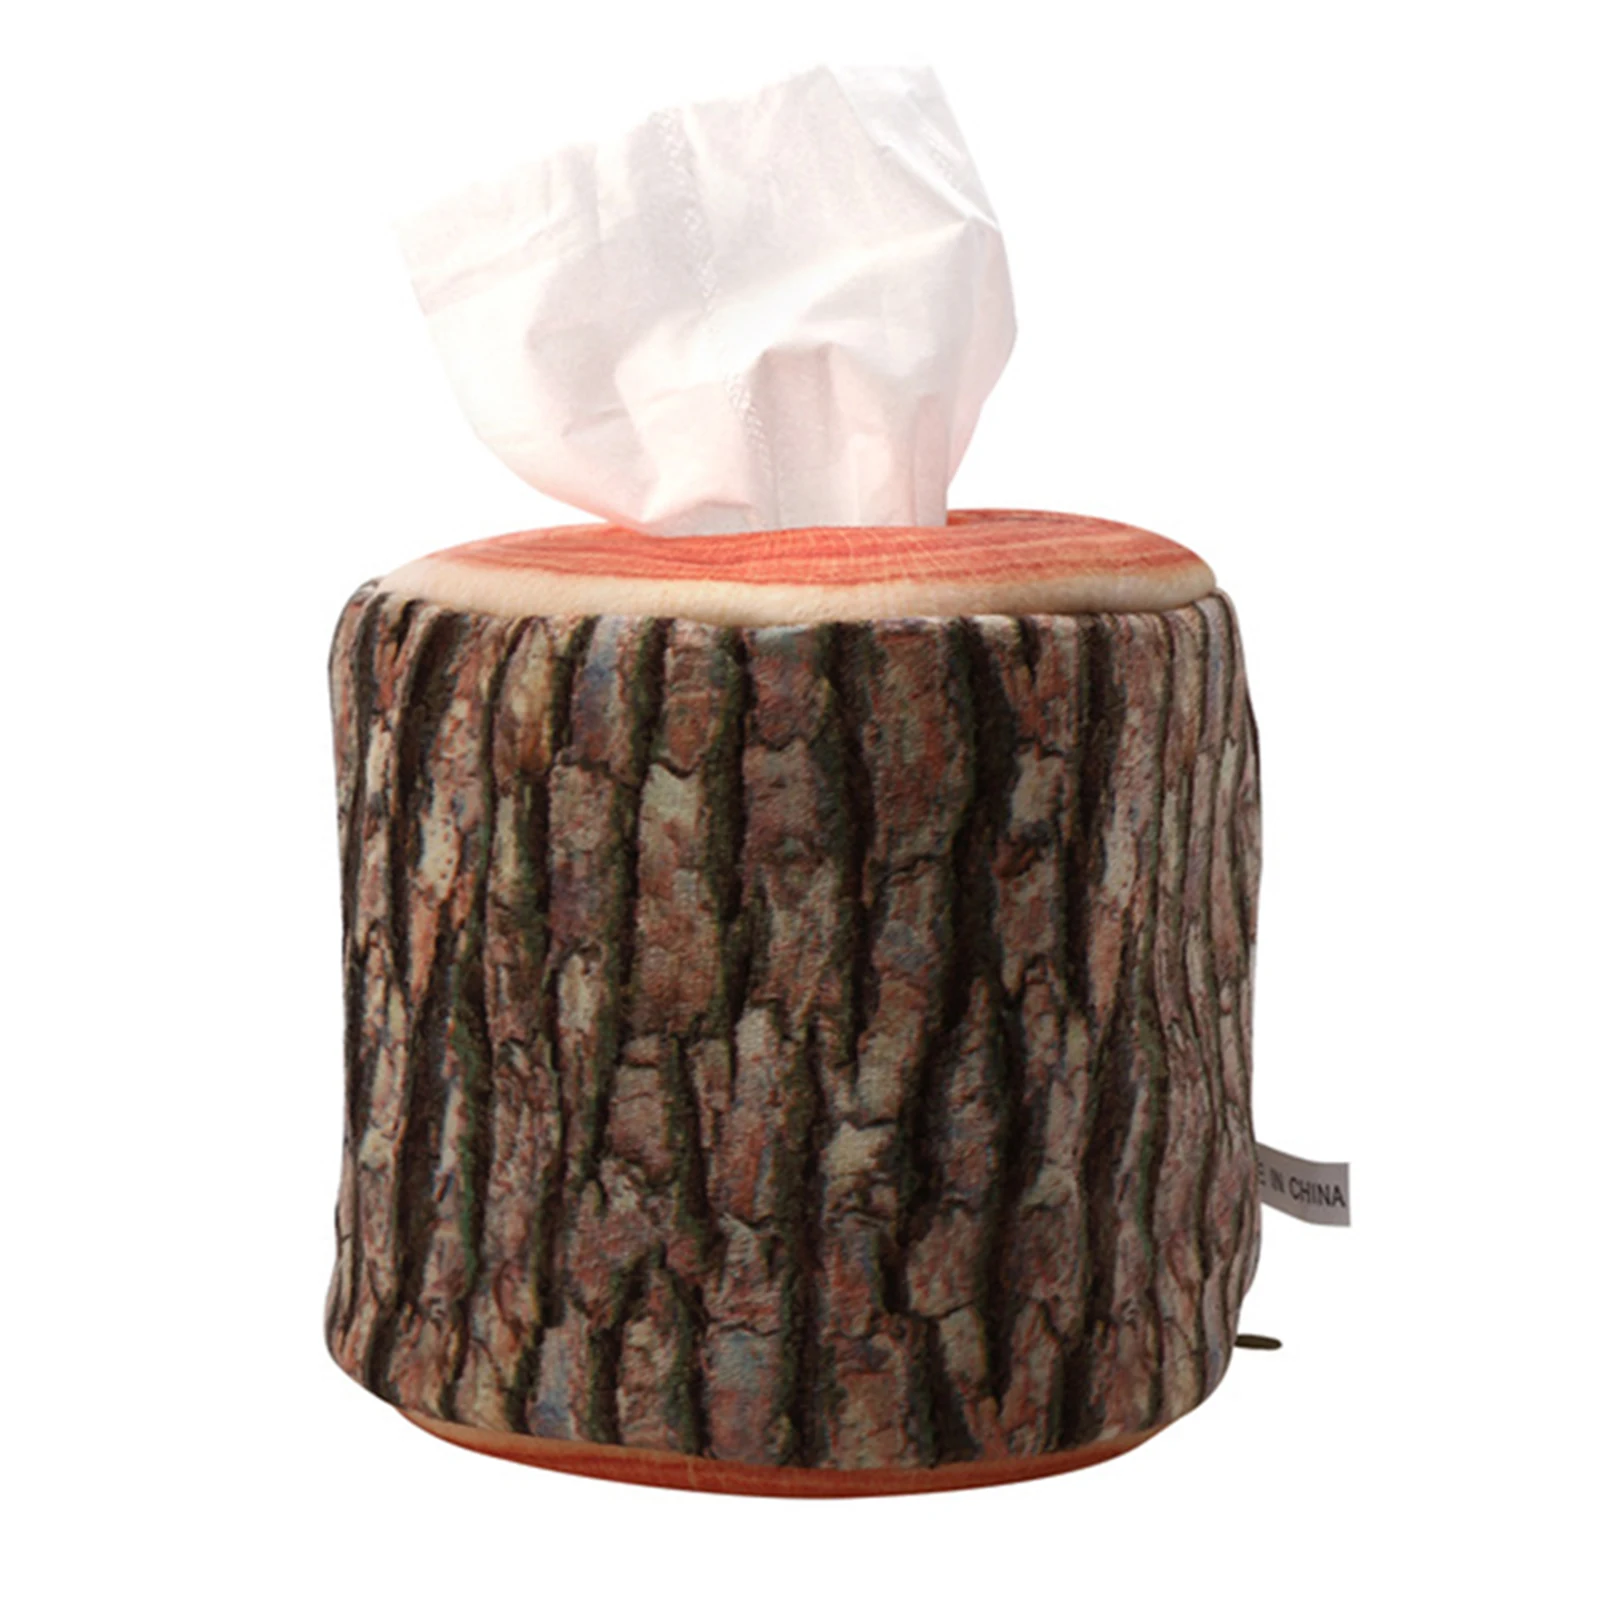 Premium Tree Bark Tissue Box Napkin Holder Paper Cover for Car Camping Table